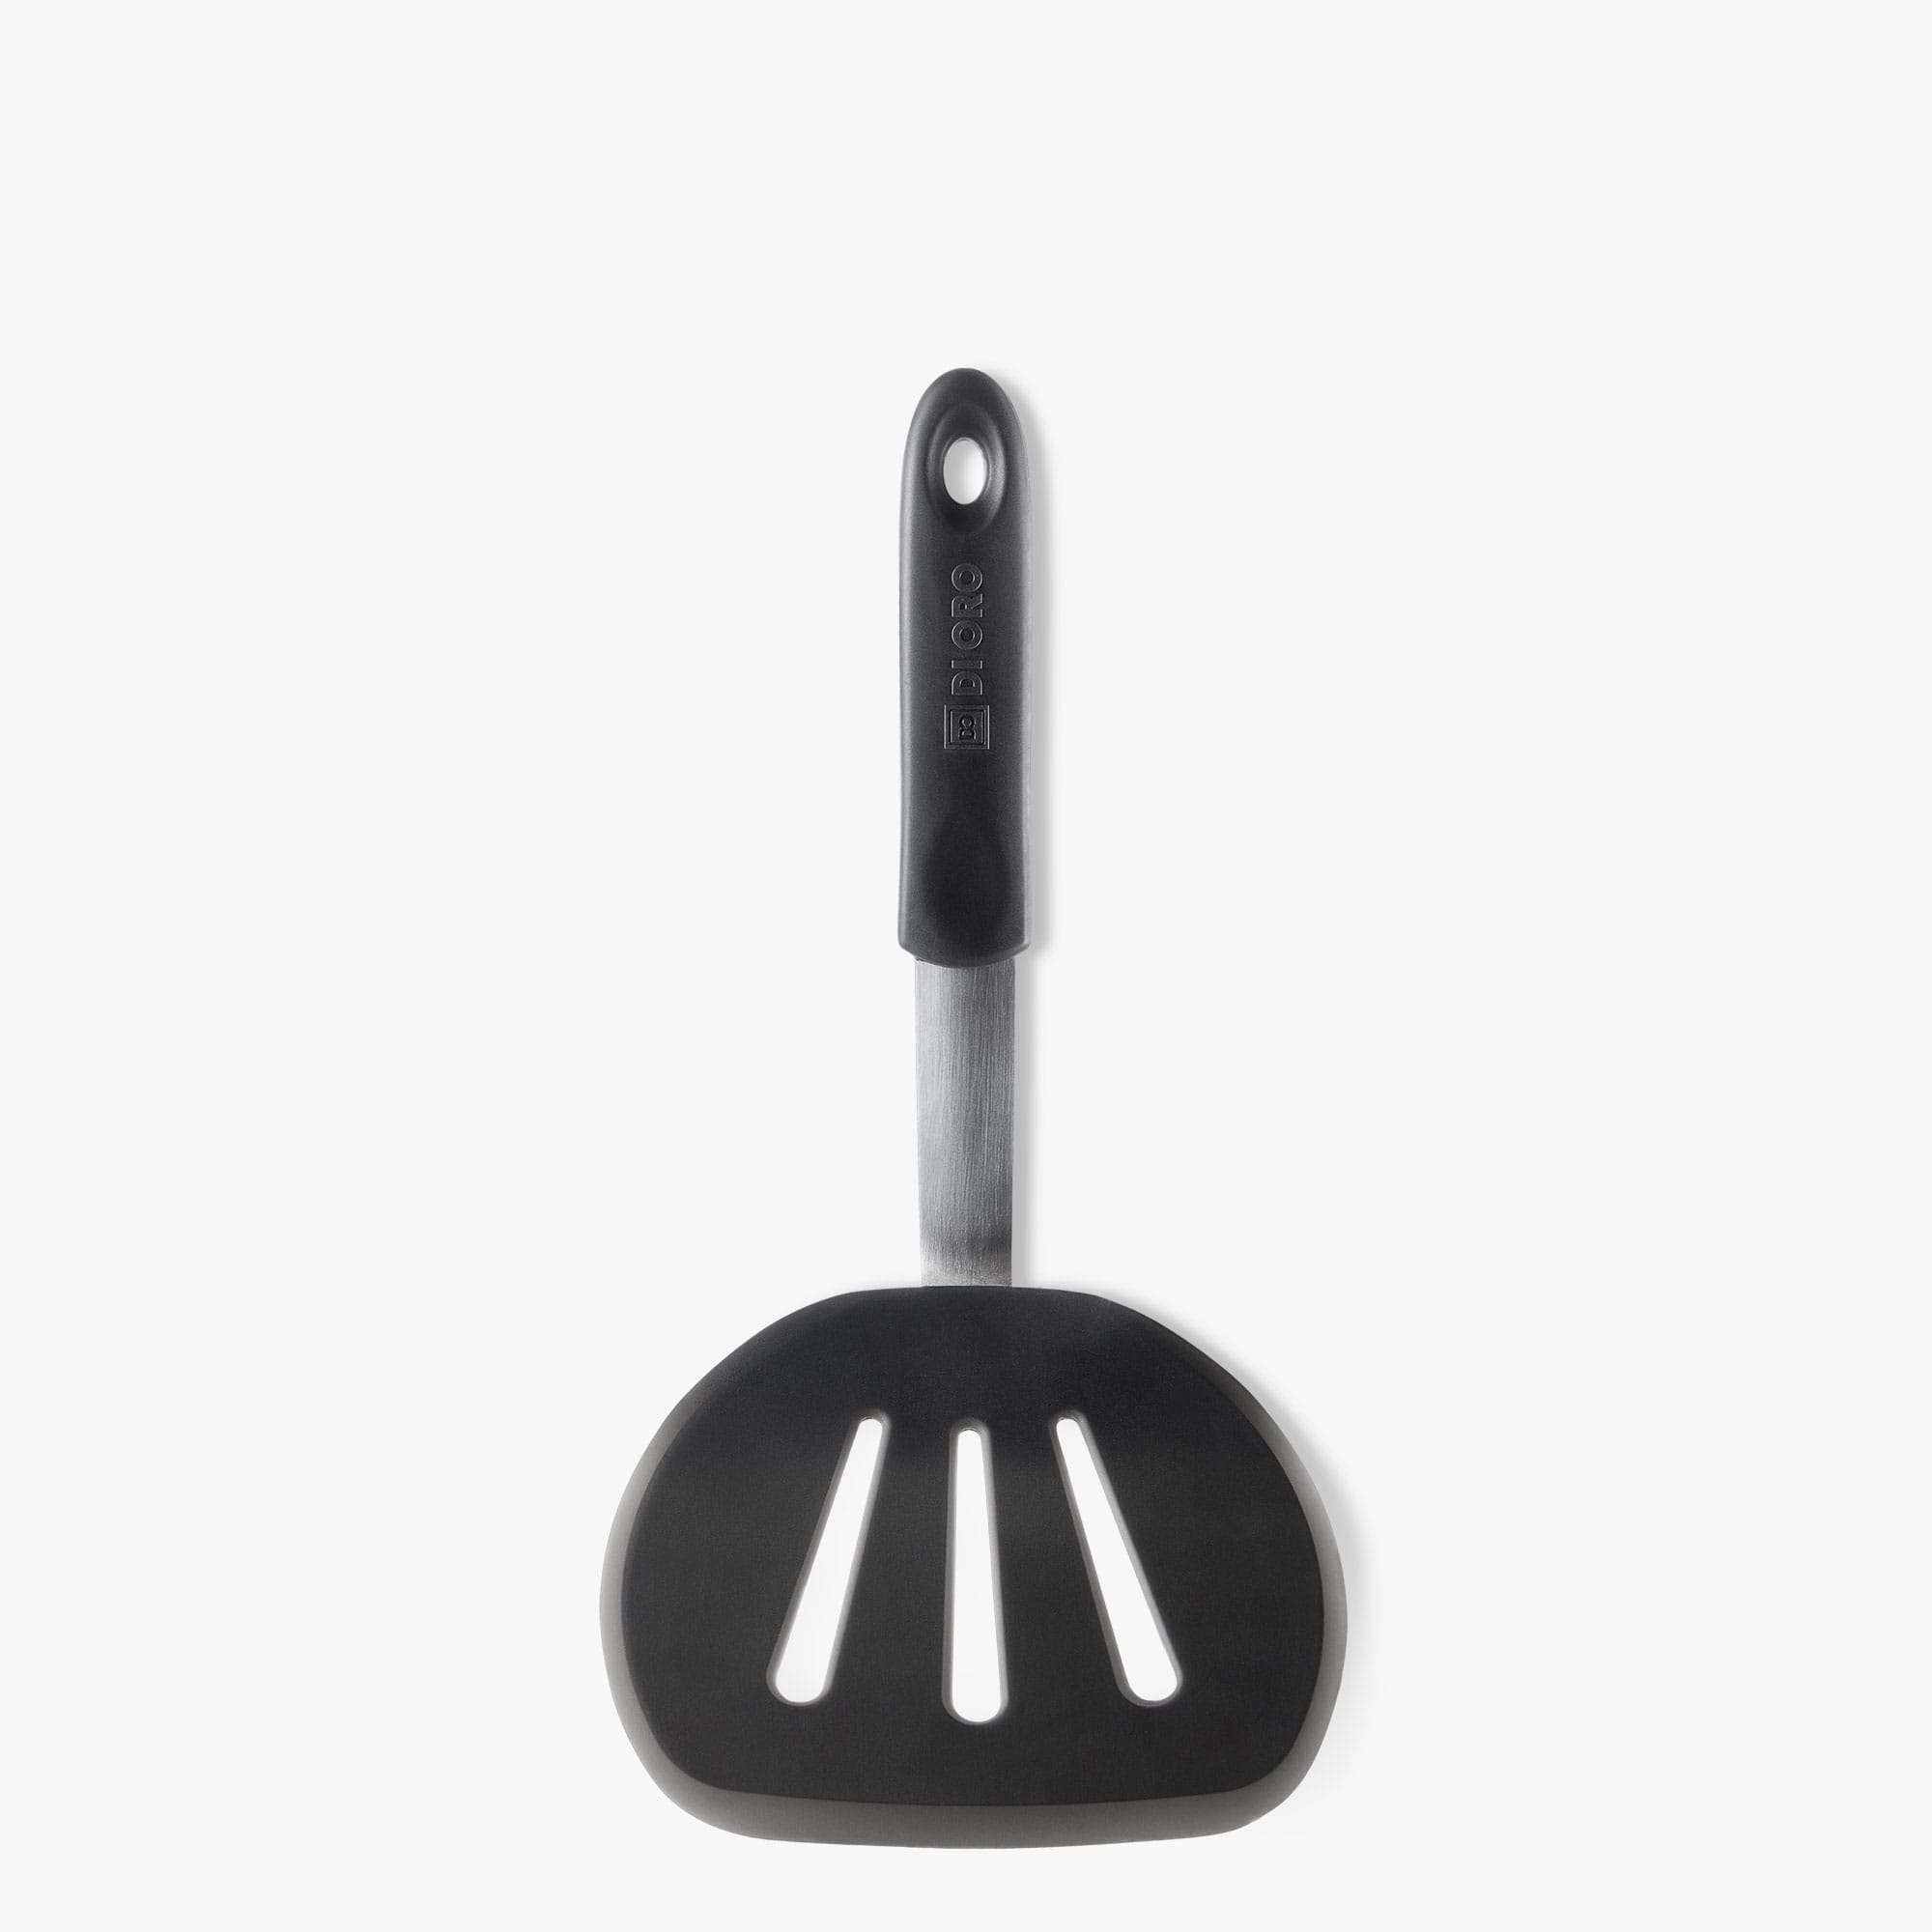 OXO Good Grips Silicone Flexible Pancake Turner - Black, 12 in